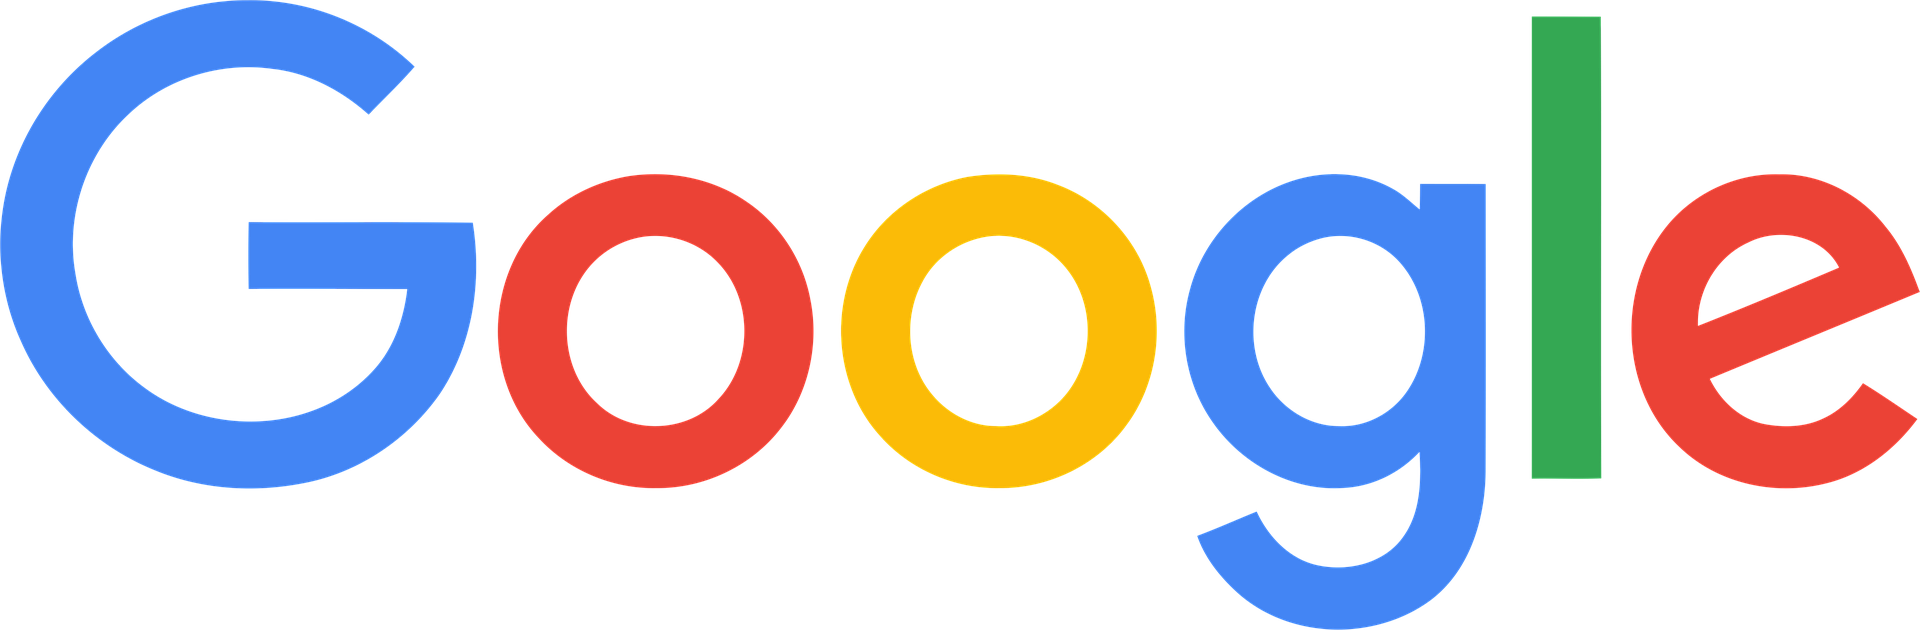 The Google Logo on a White Background